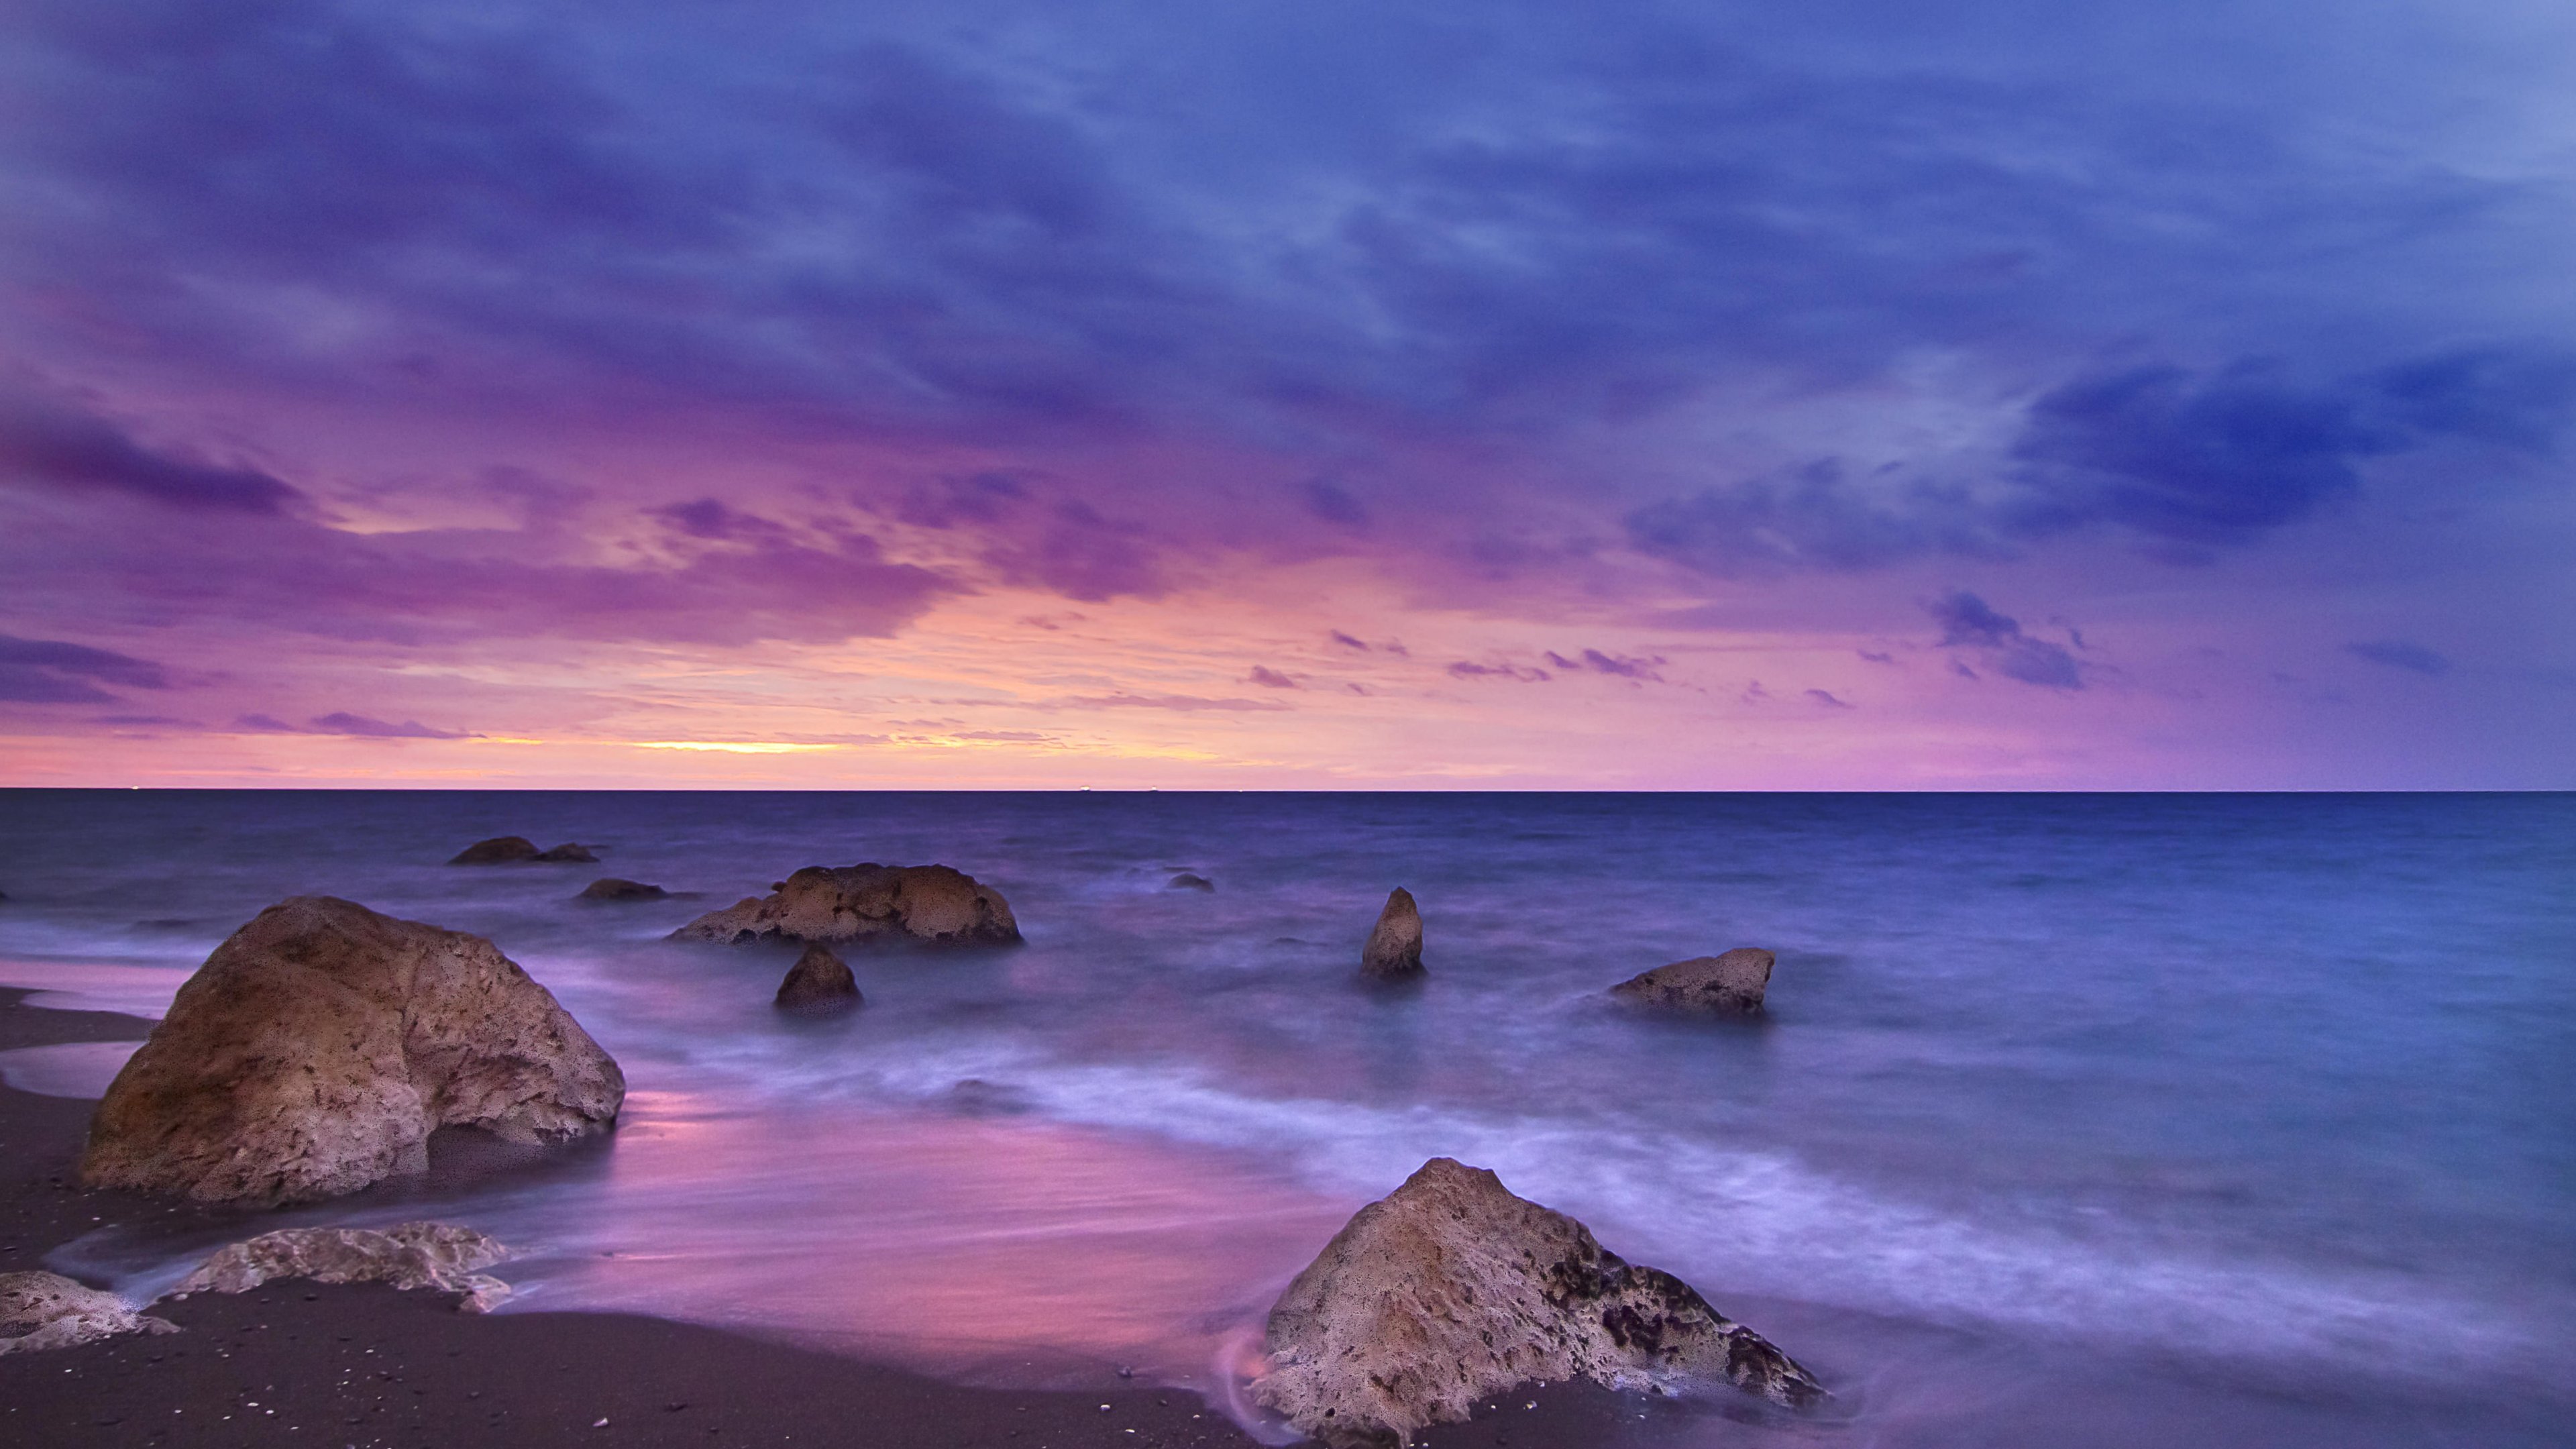 Ocean Sunset Wallpaper   iPhone Android Desktop Backgrounds